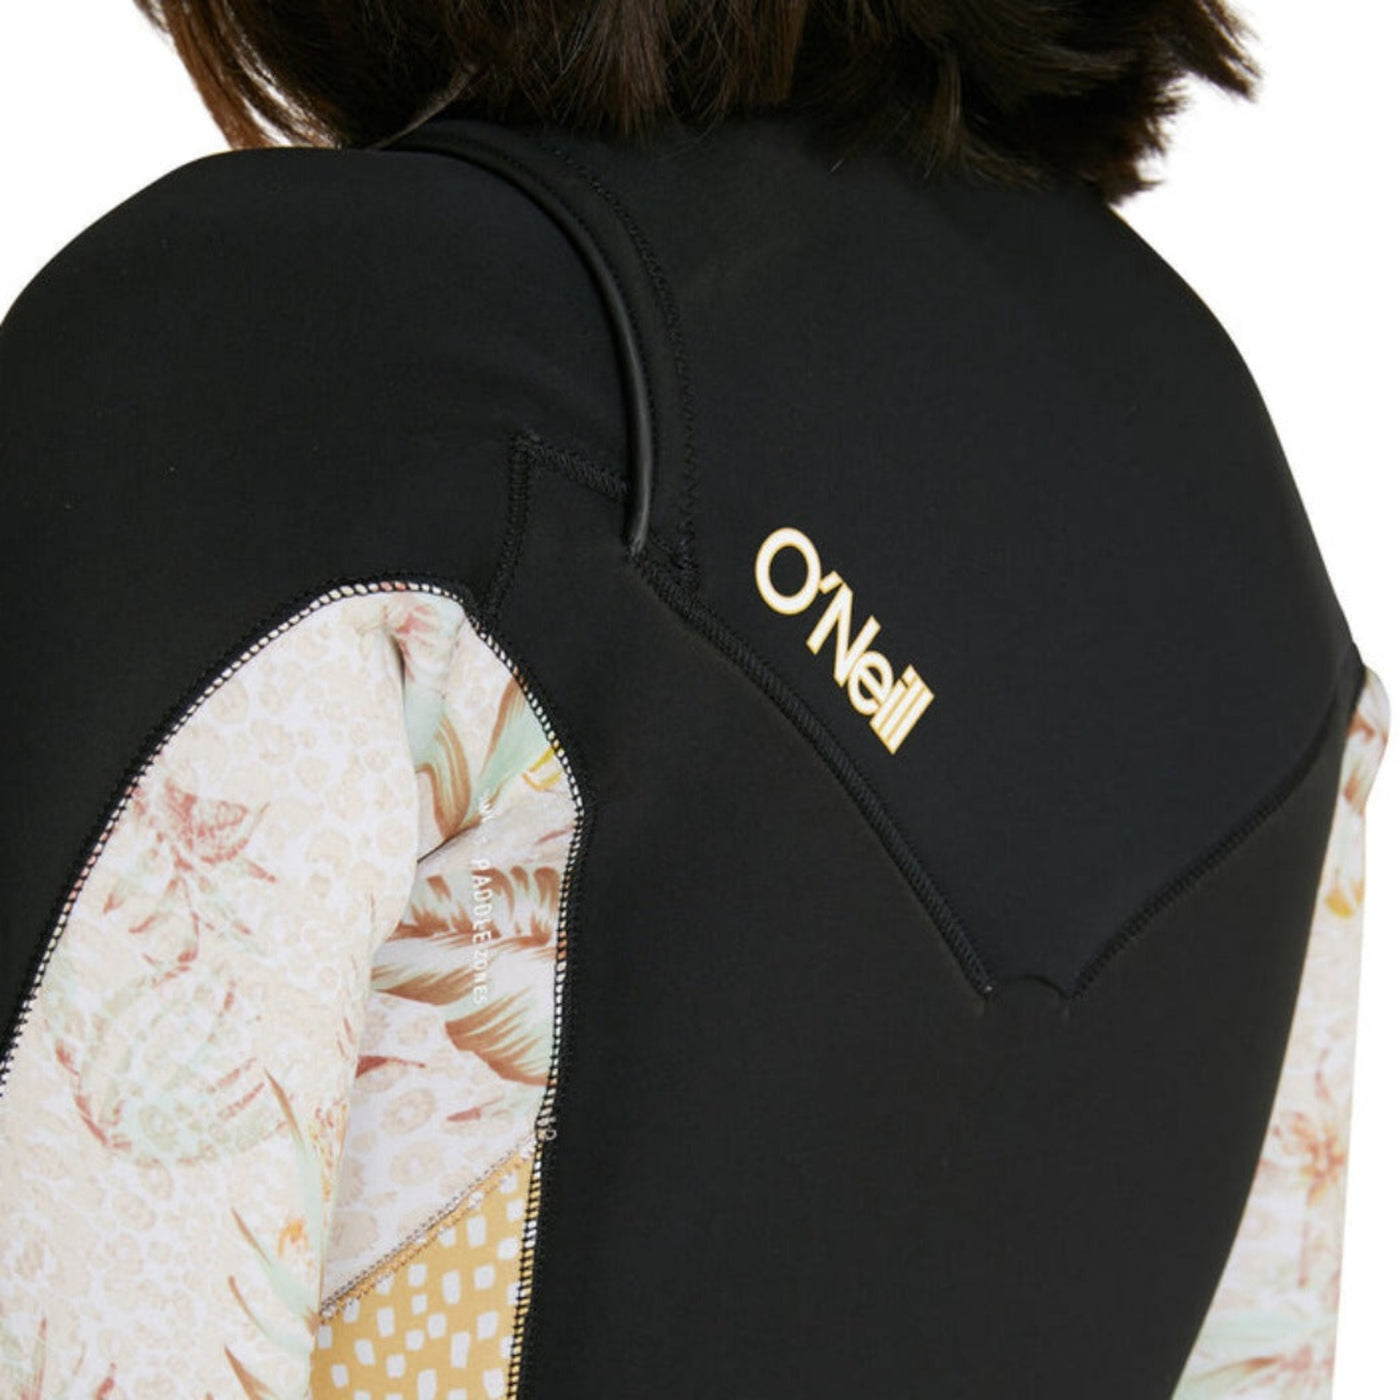 O'Neill Women's Bahia 4/3mm Steamer Wetsuit - Chest Zip